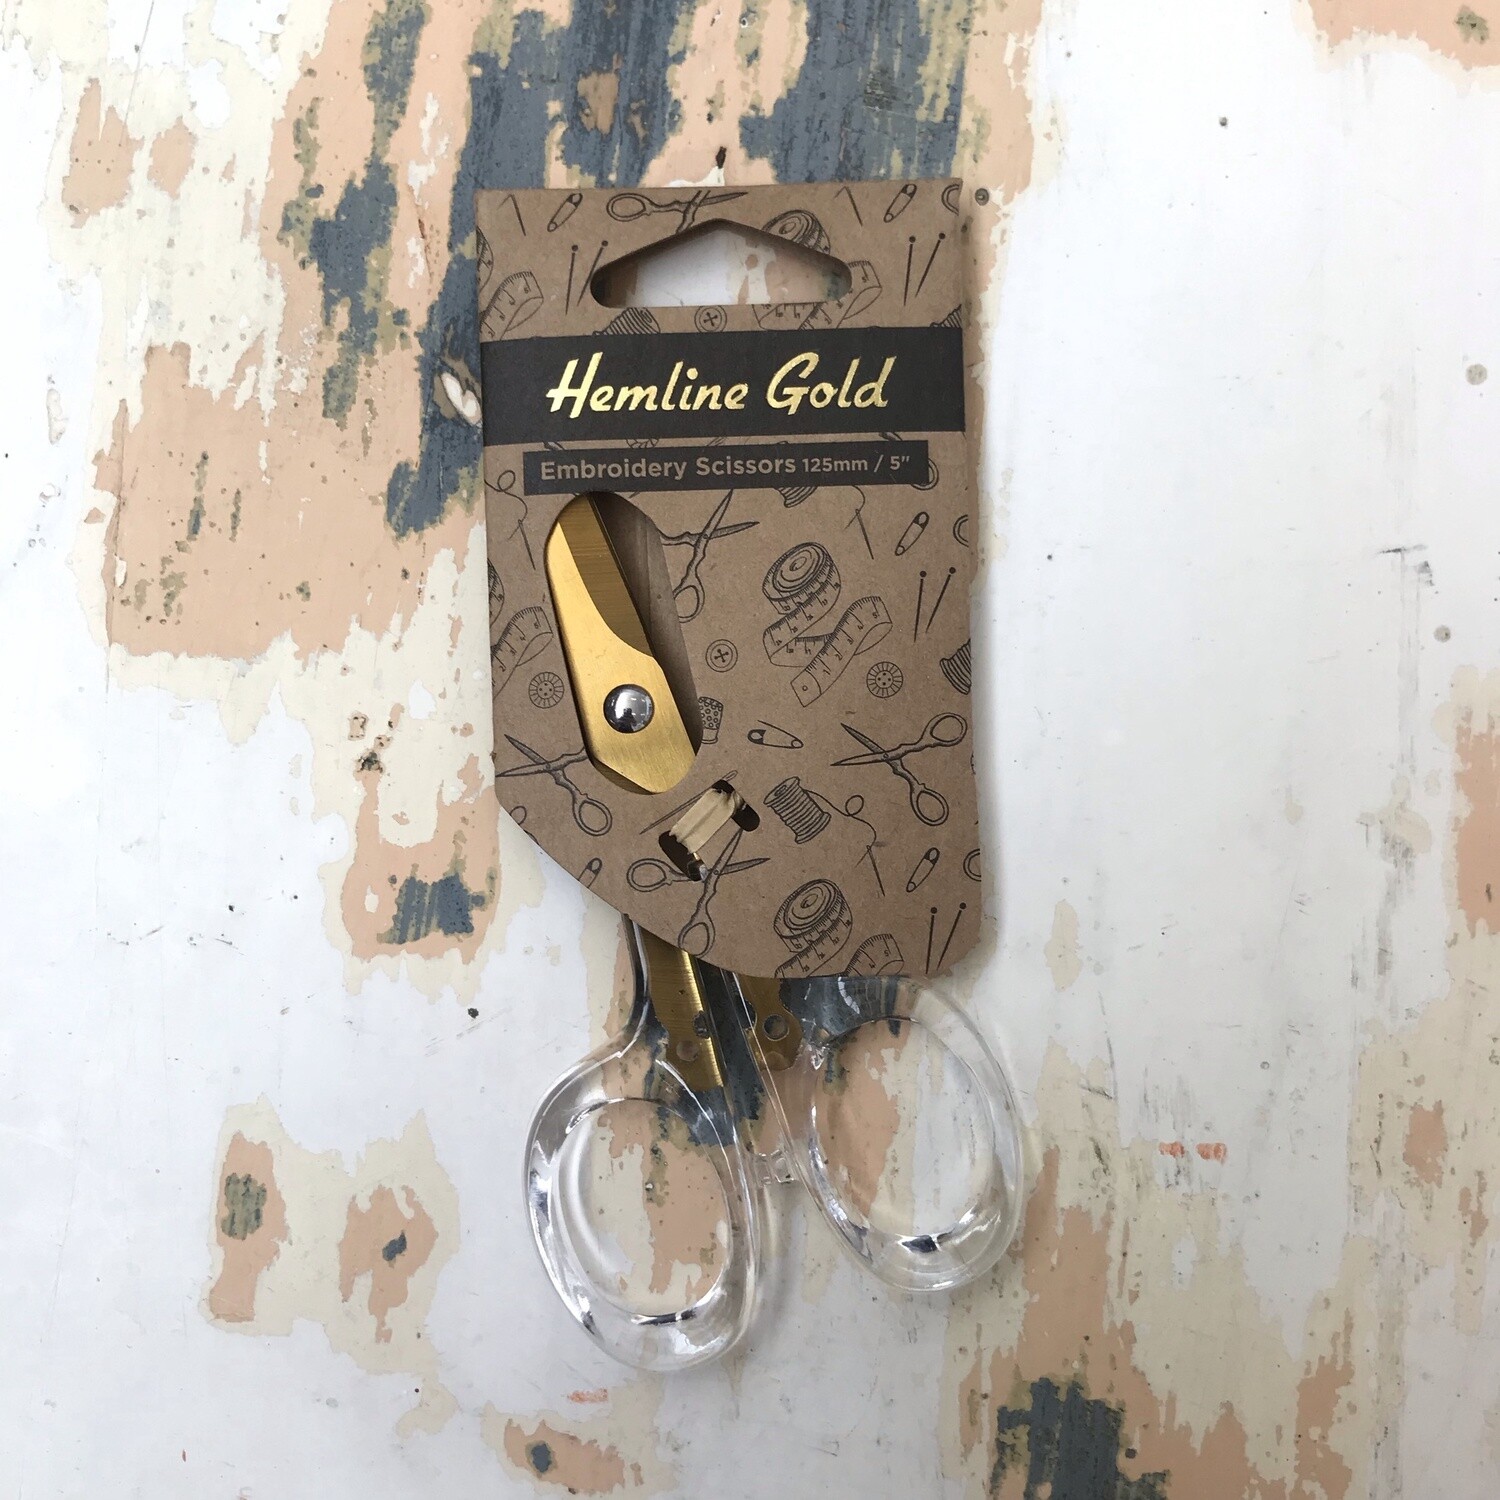 Hemline Gold Embroidery Scissors